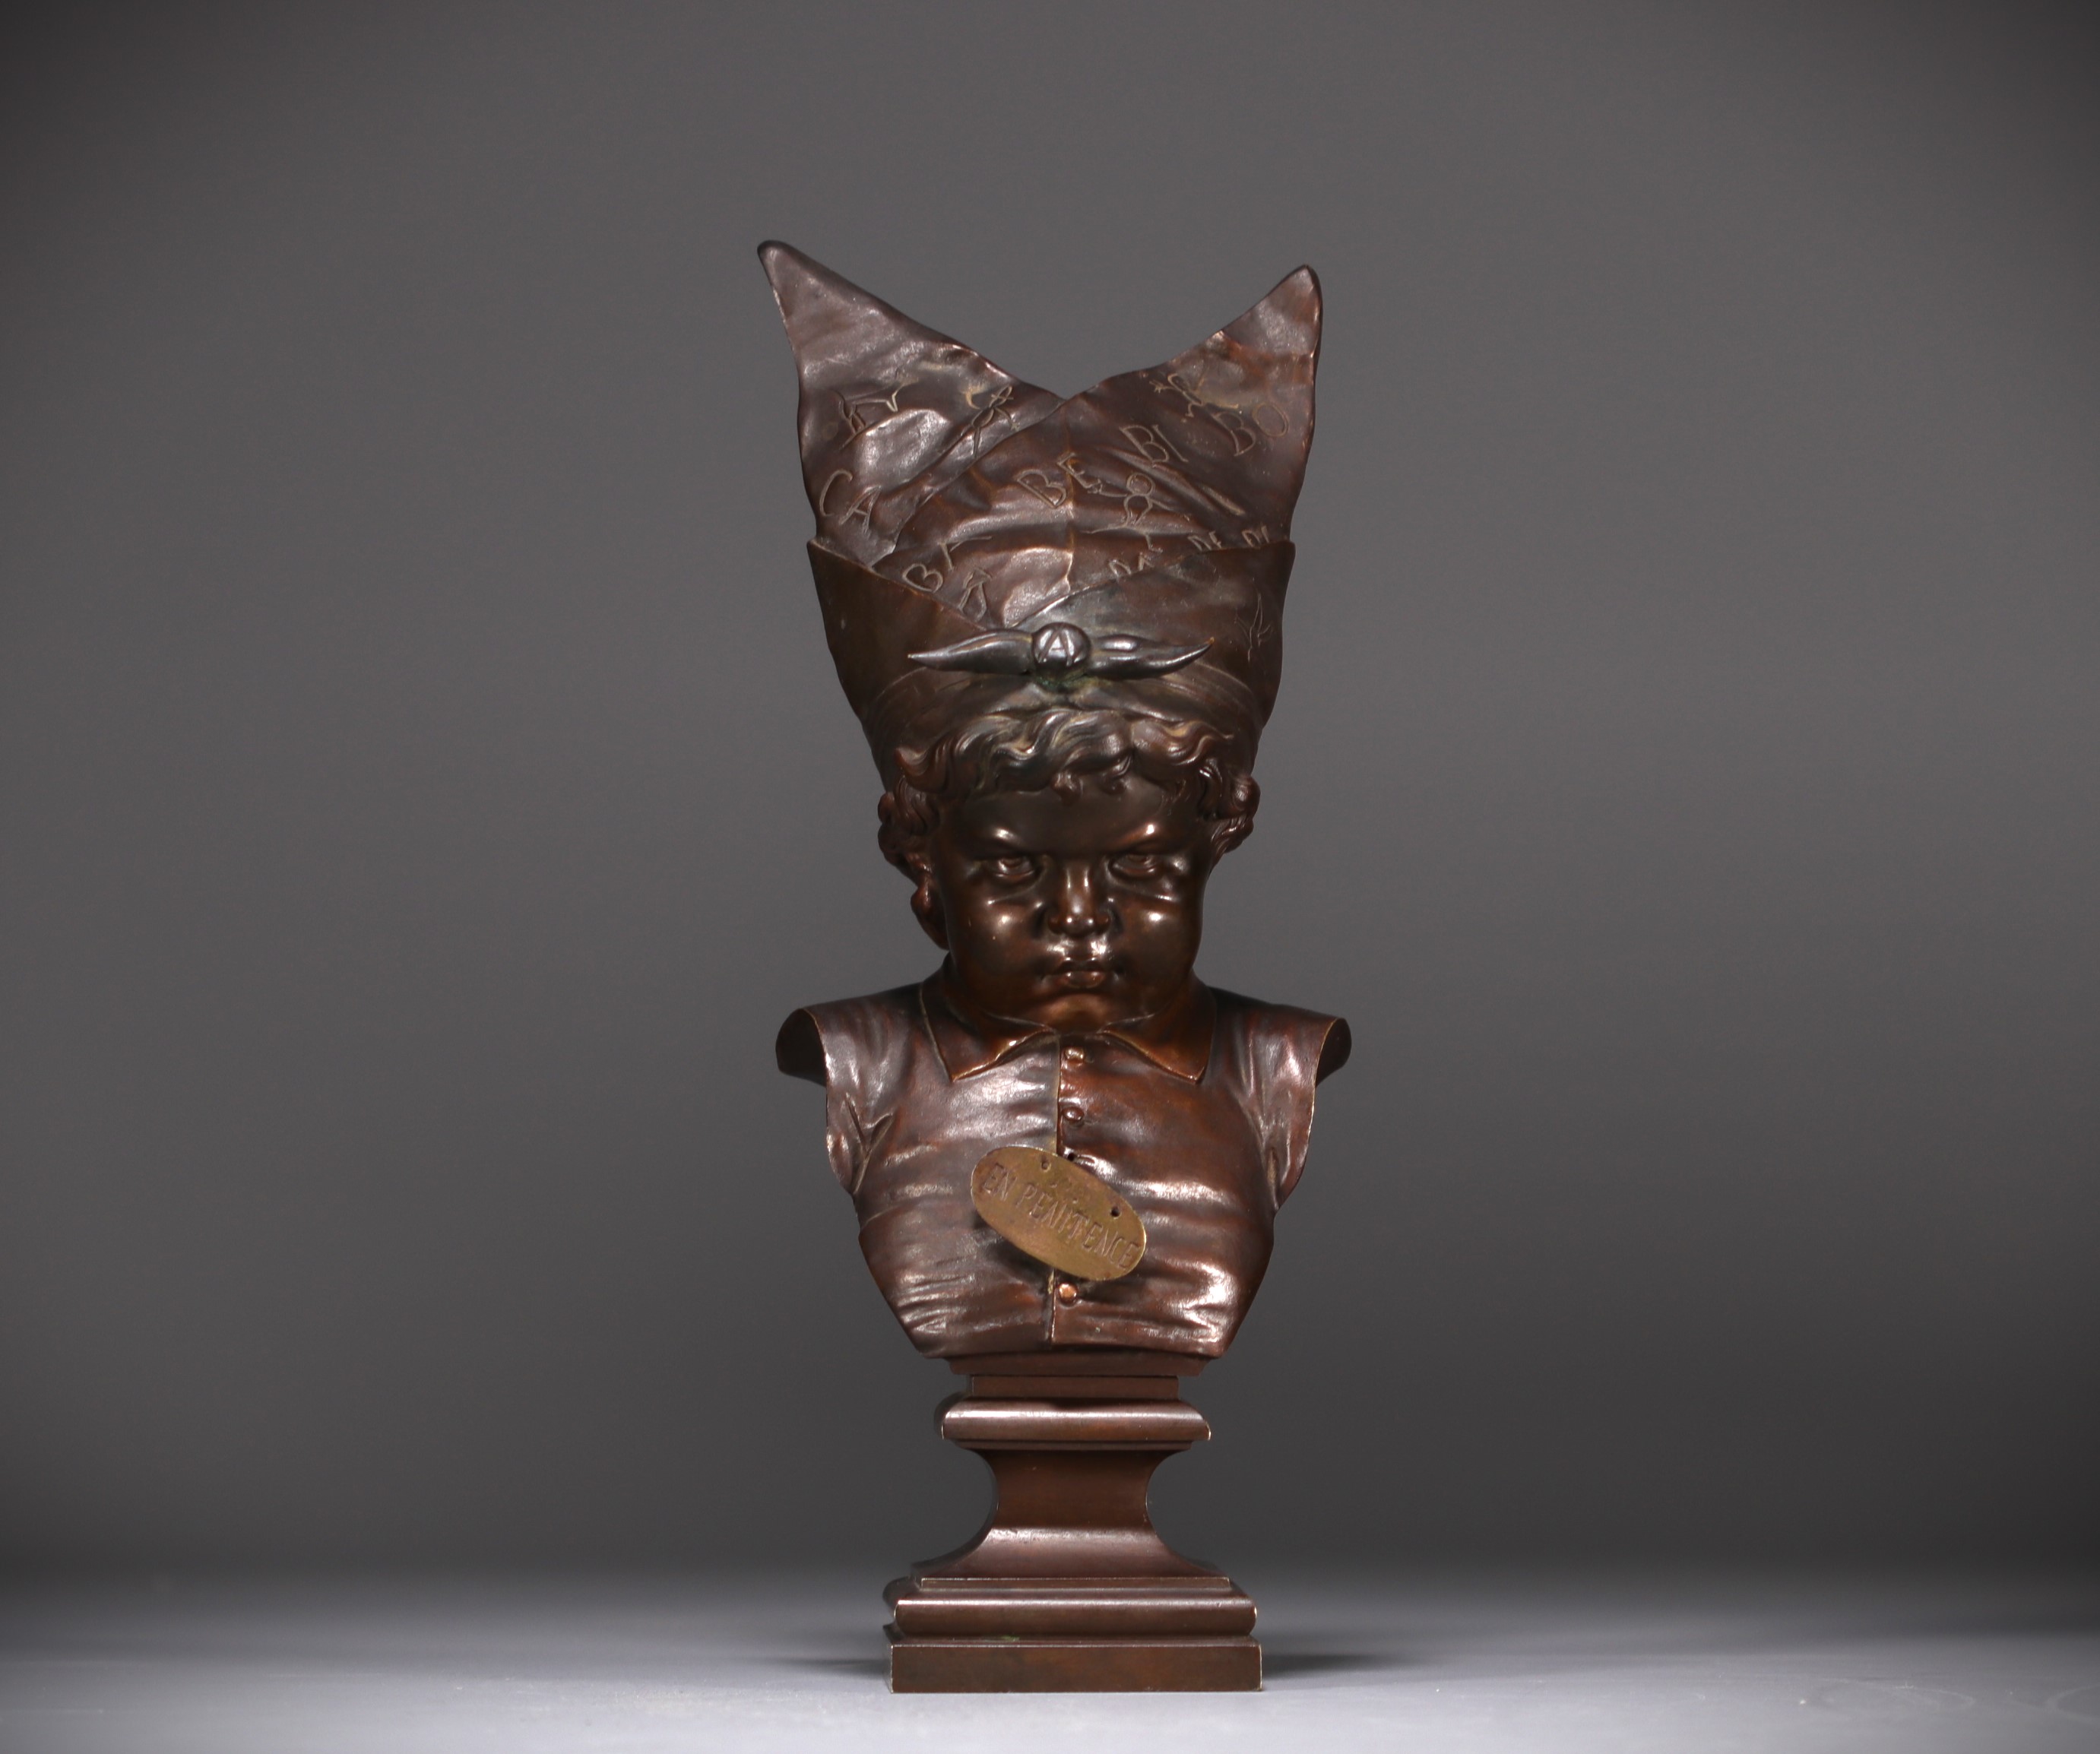 Nicolas LECORNET known as "Lecorney" (1825-1884) "En penitence", child with dunce cap, bronze bust w